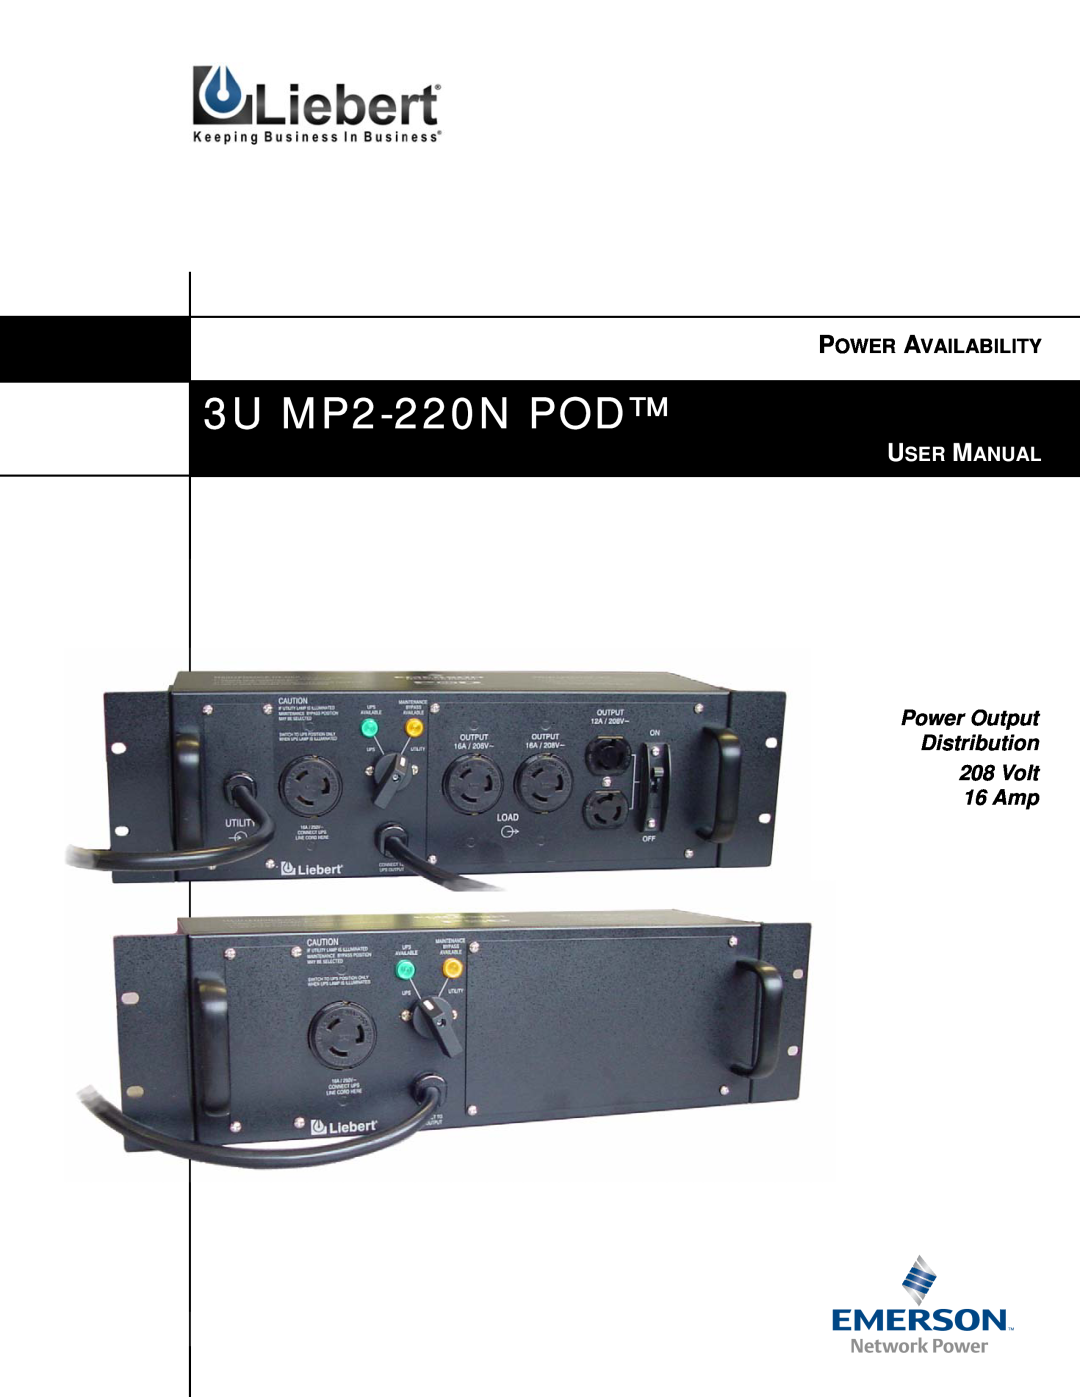 Emerson user manual 3U MP2-220N POD, Power Availability, Power Output Distribution 208 Volt 16 Amp 